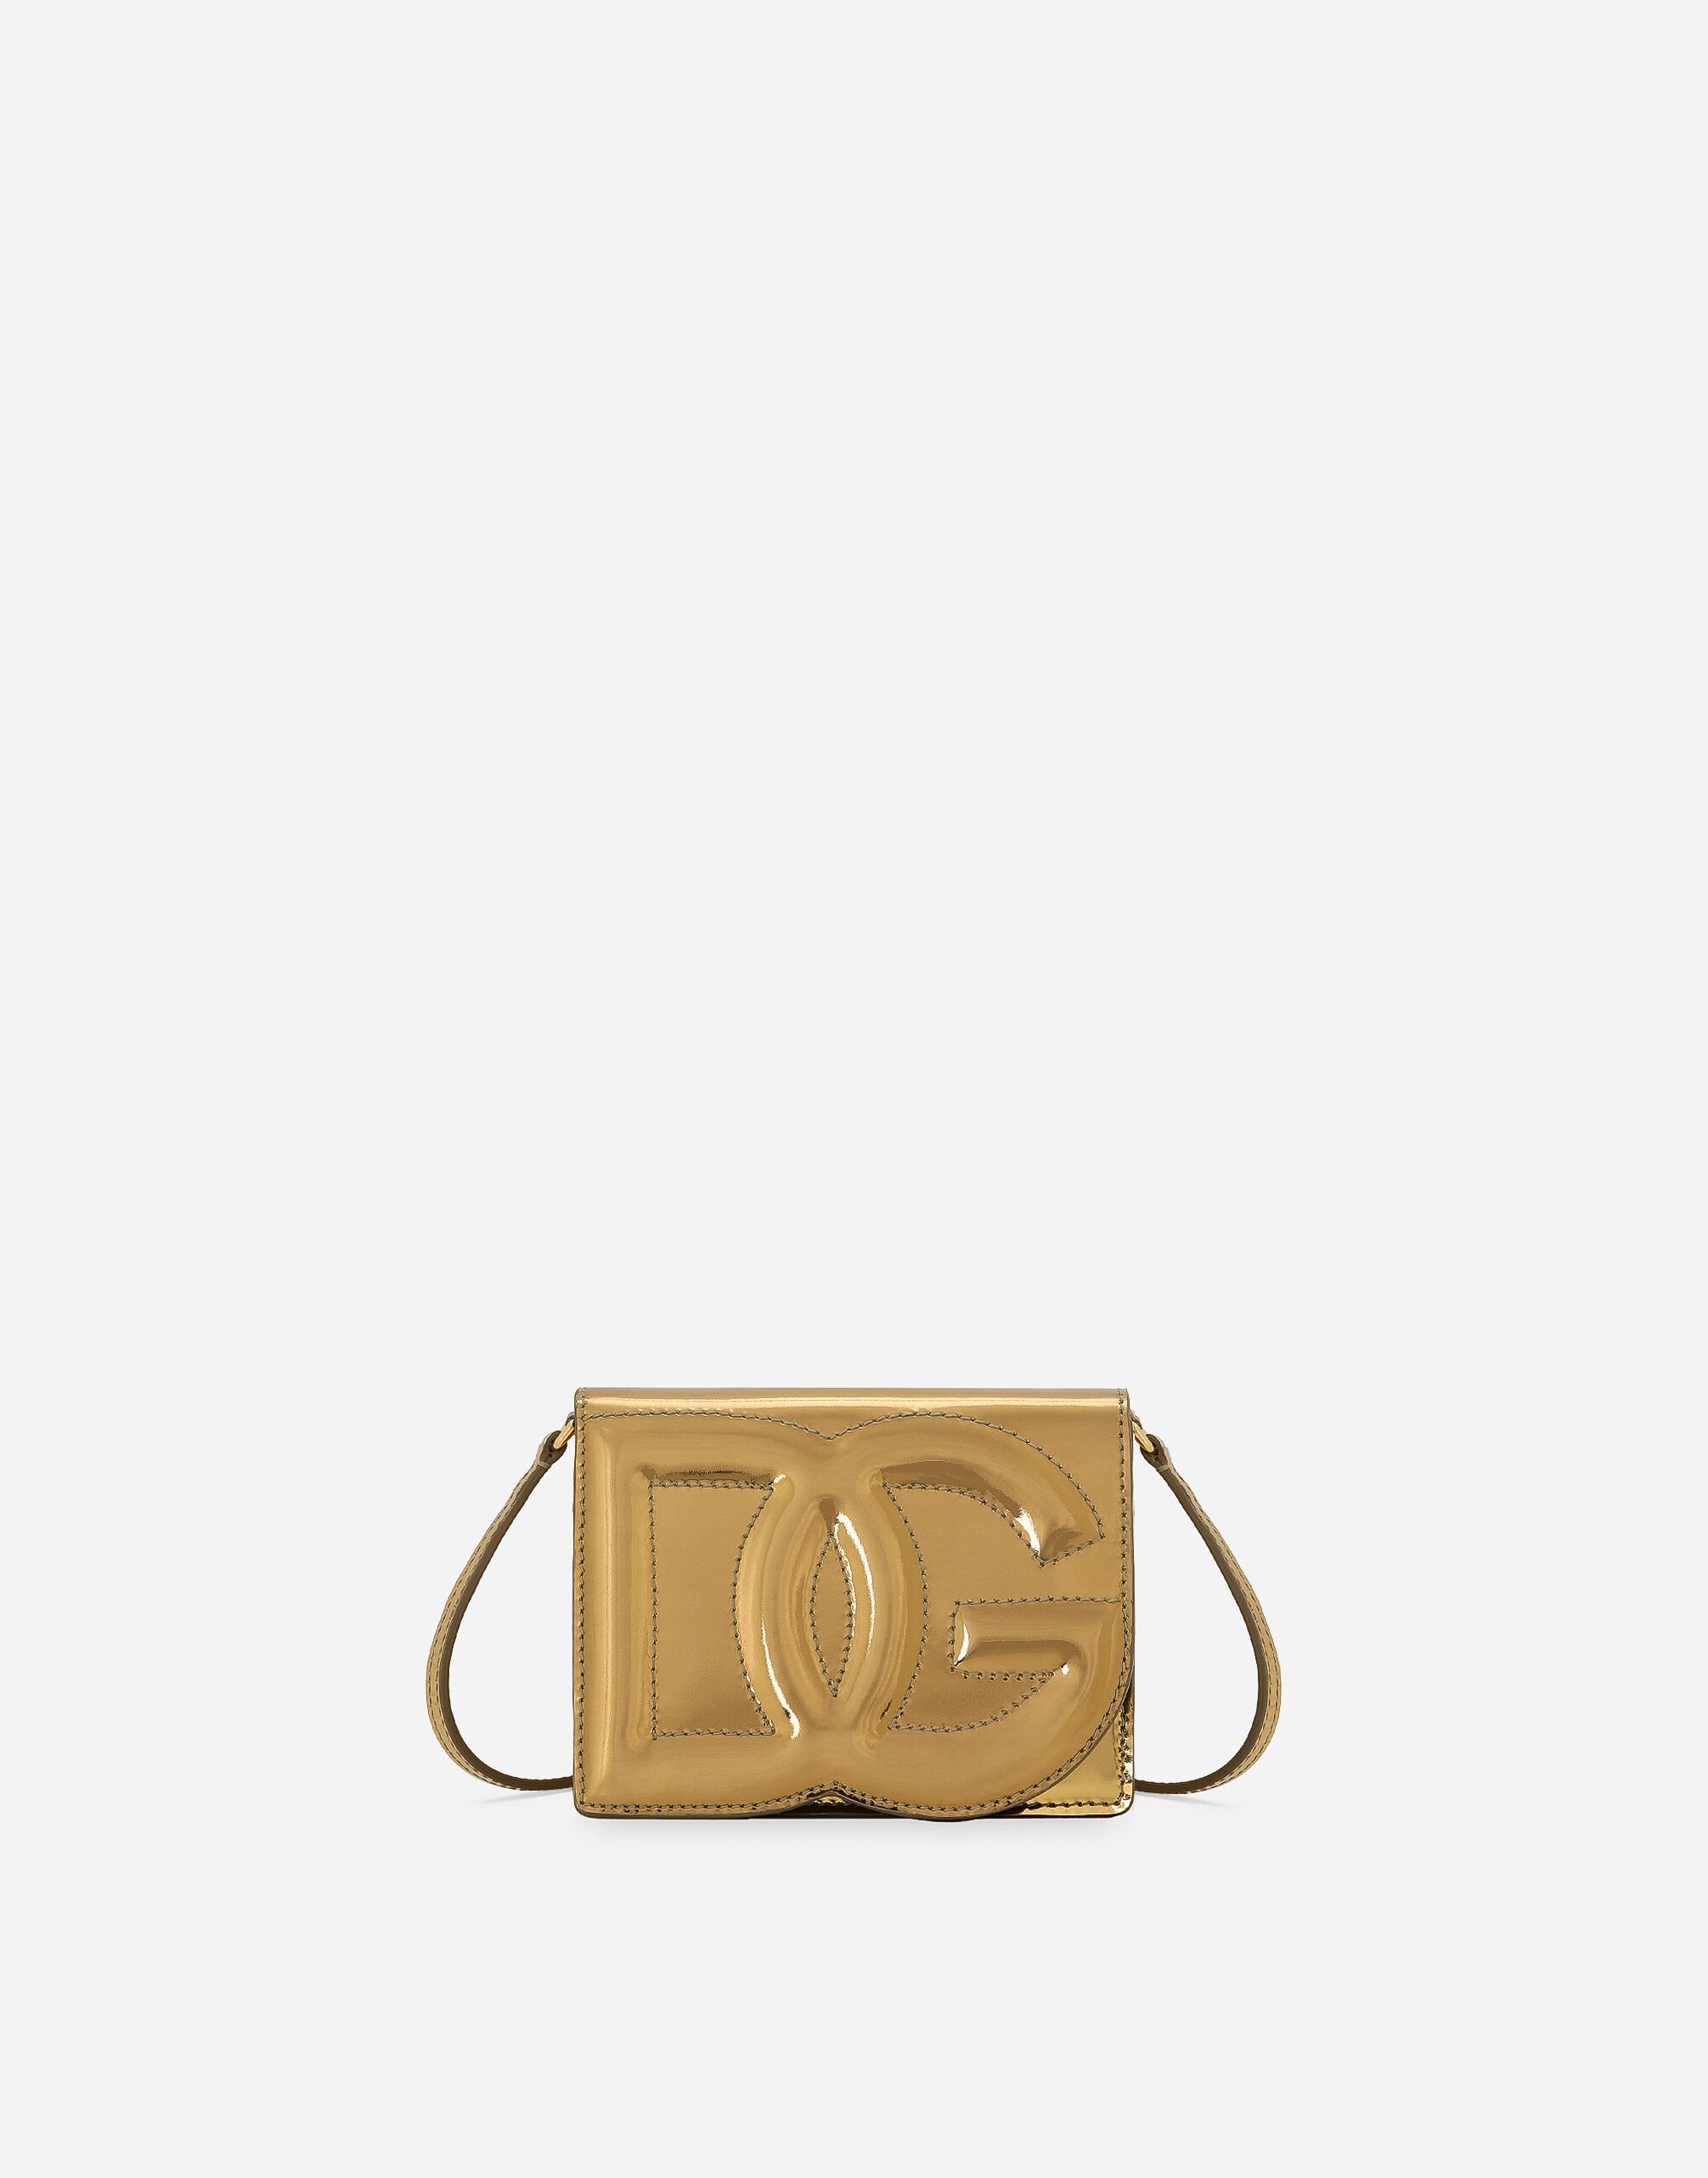 Dolce & Gabbana DG Logo Bag クロスボディバッグ スモール ピンク BB7287AS204